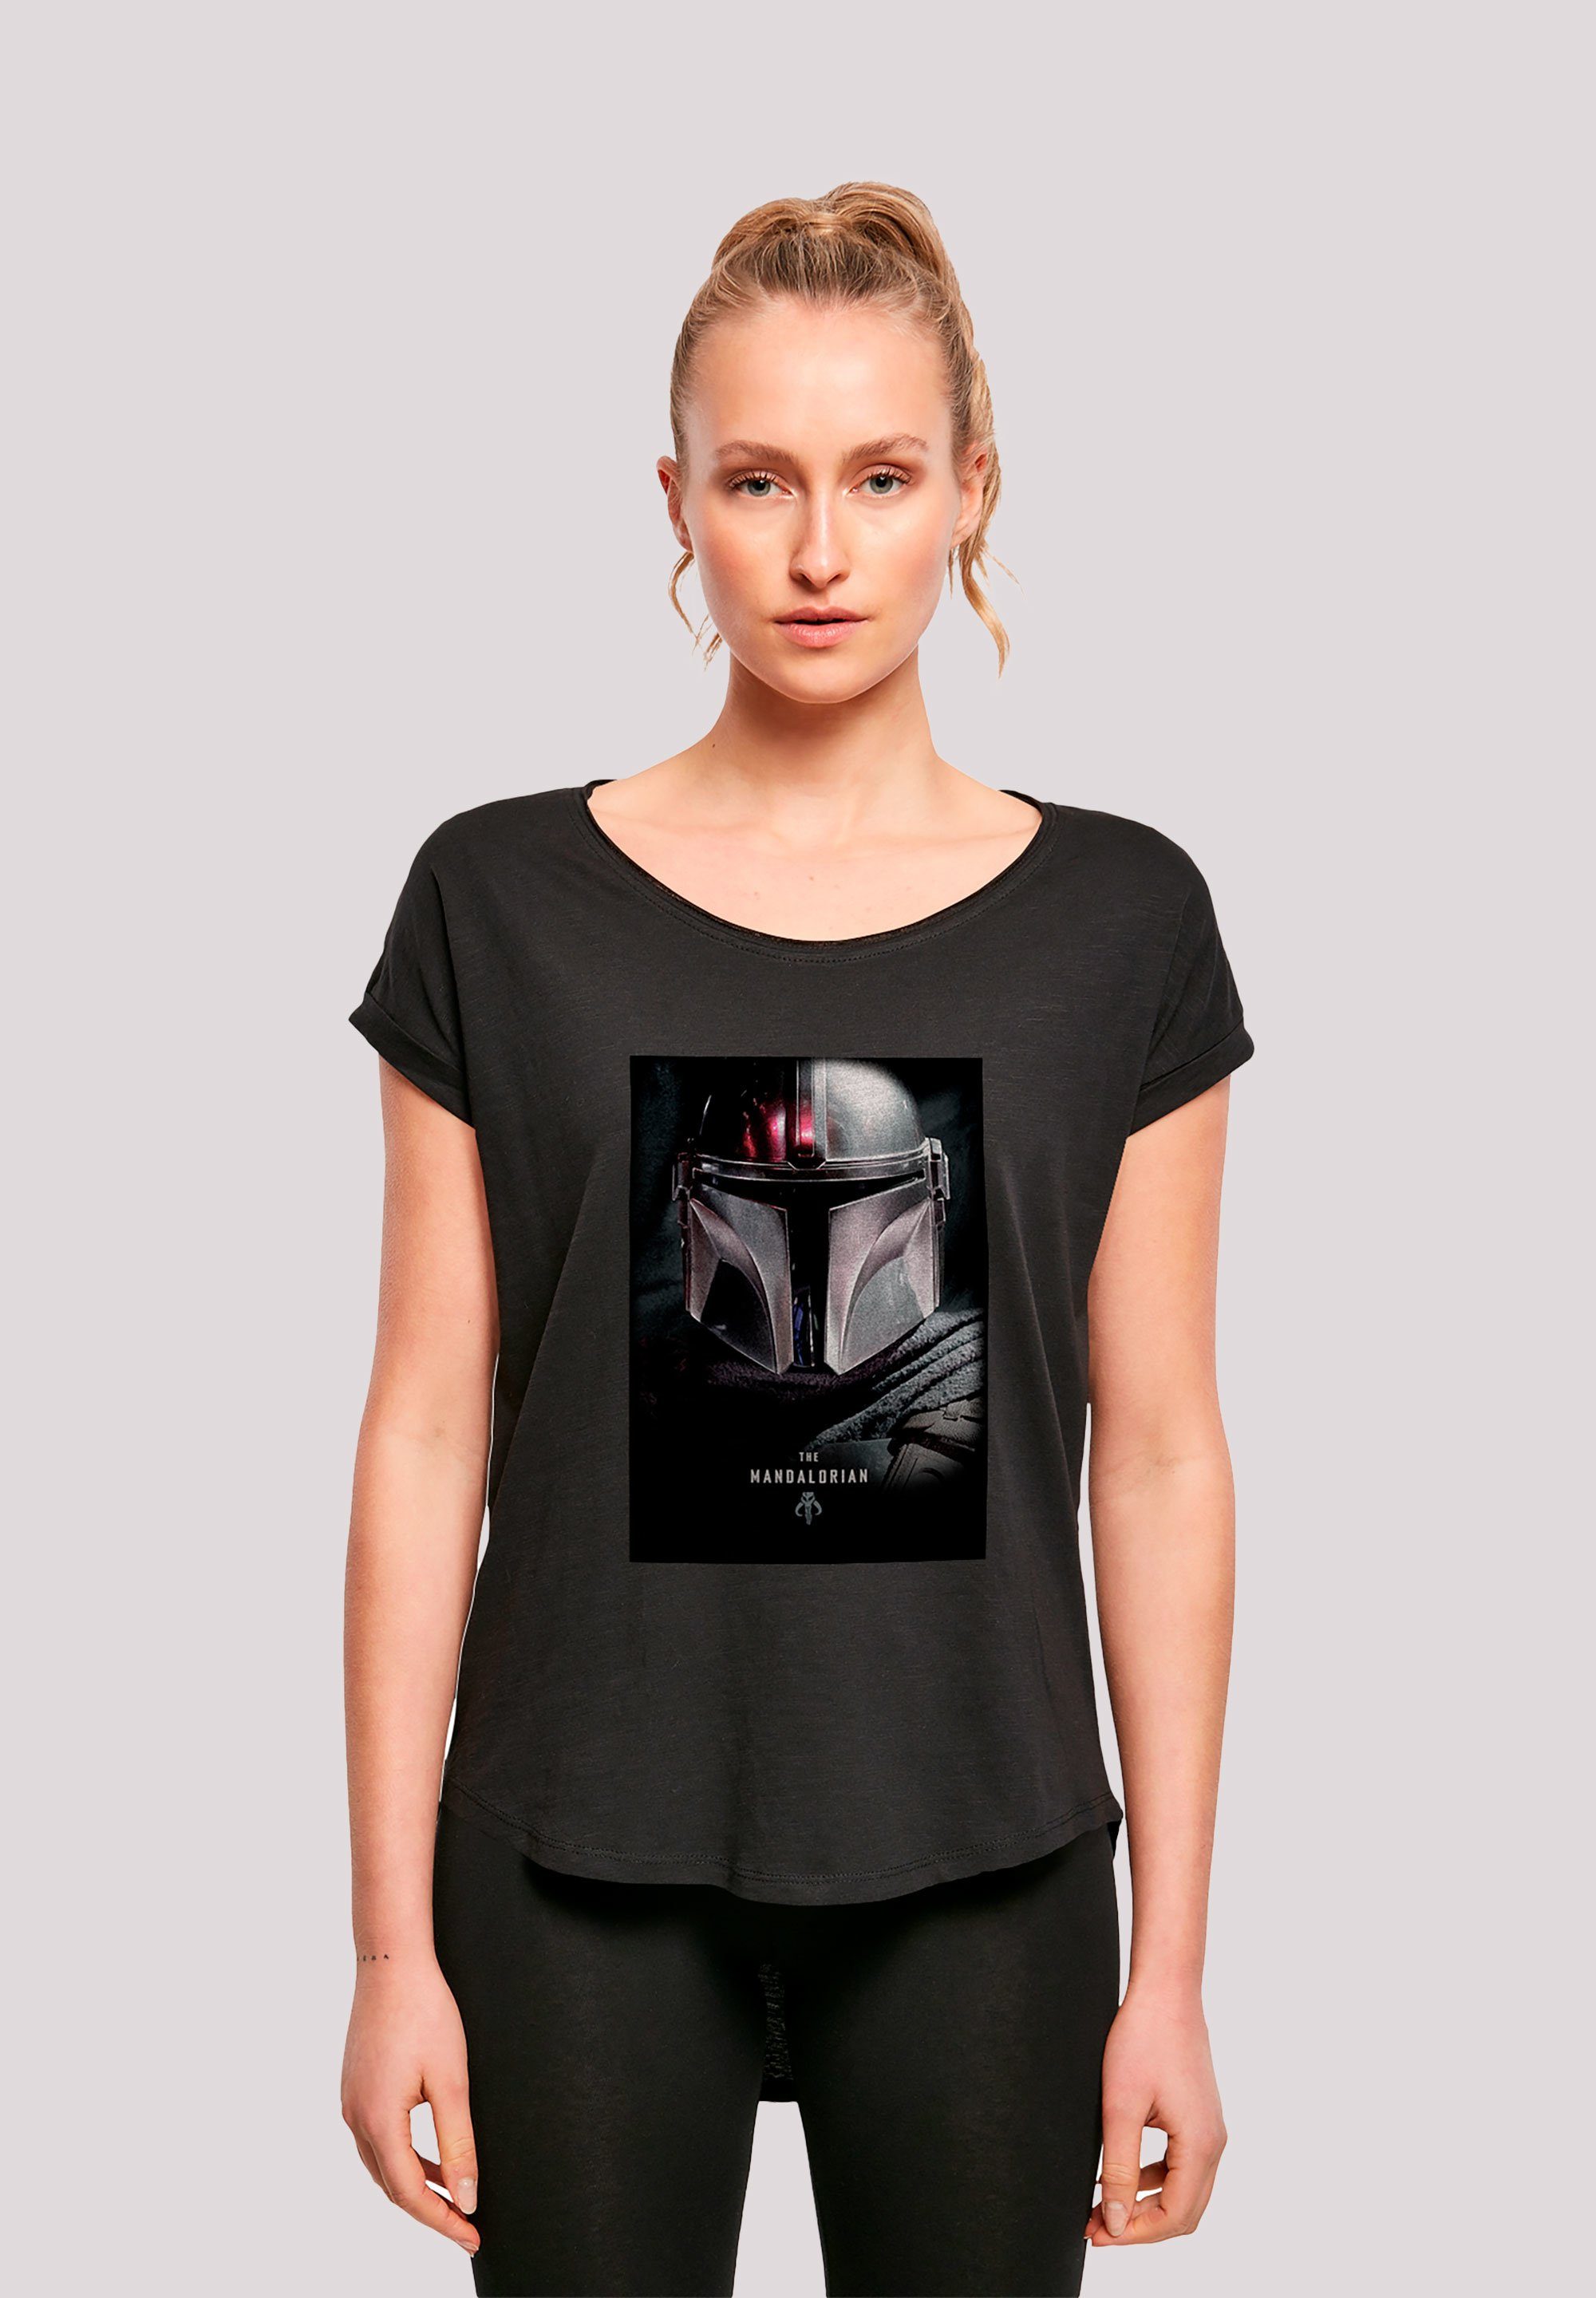 Damen Shirts F4NT4STIC T-Shirt Star Wars The Mandalorian Poster - Premium Krieg der Sterne Fan Merch - Darth Vader Yoda Han Solo